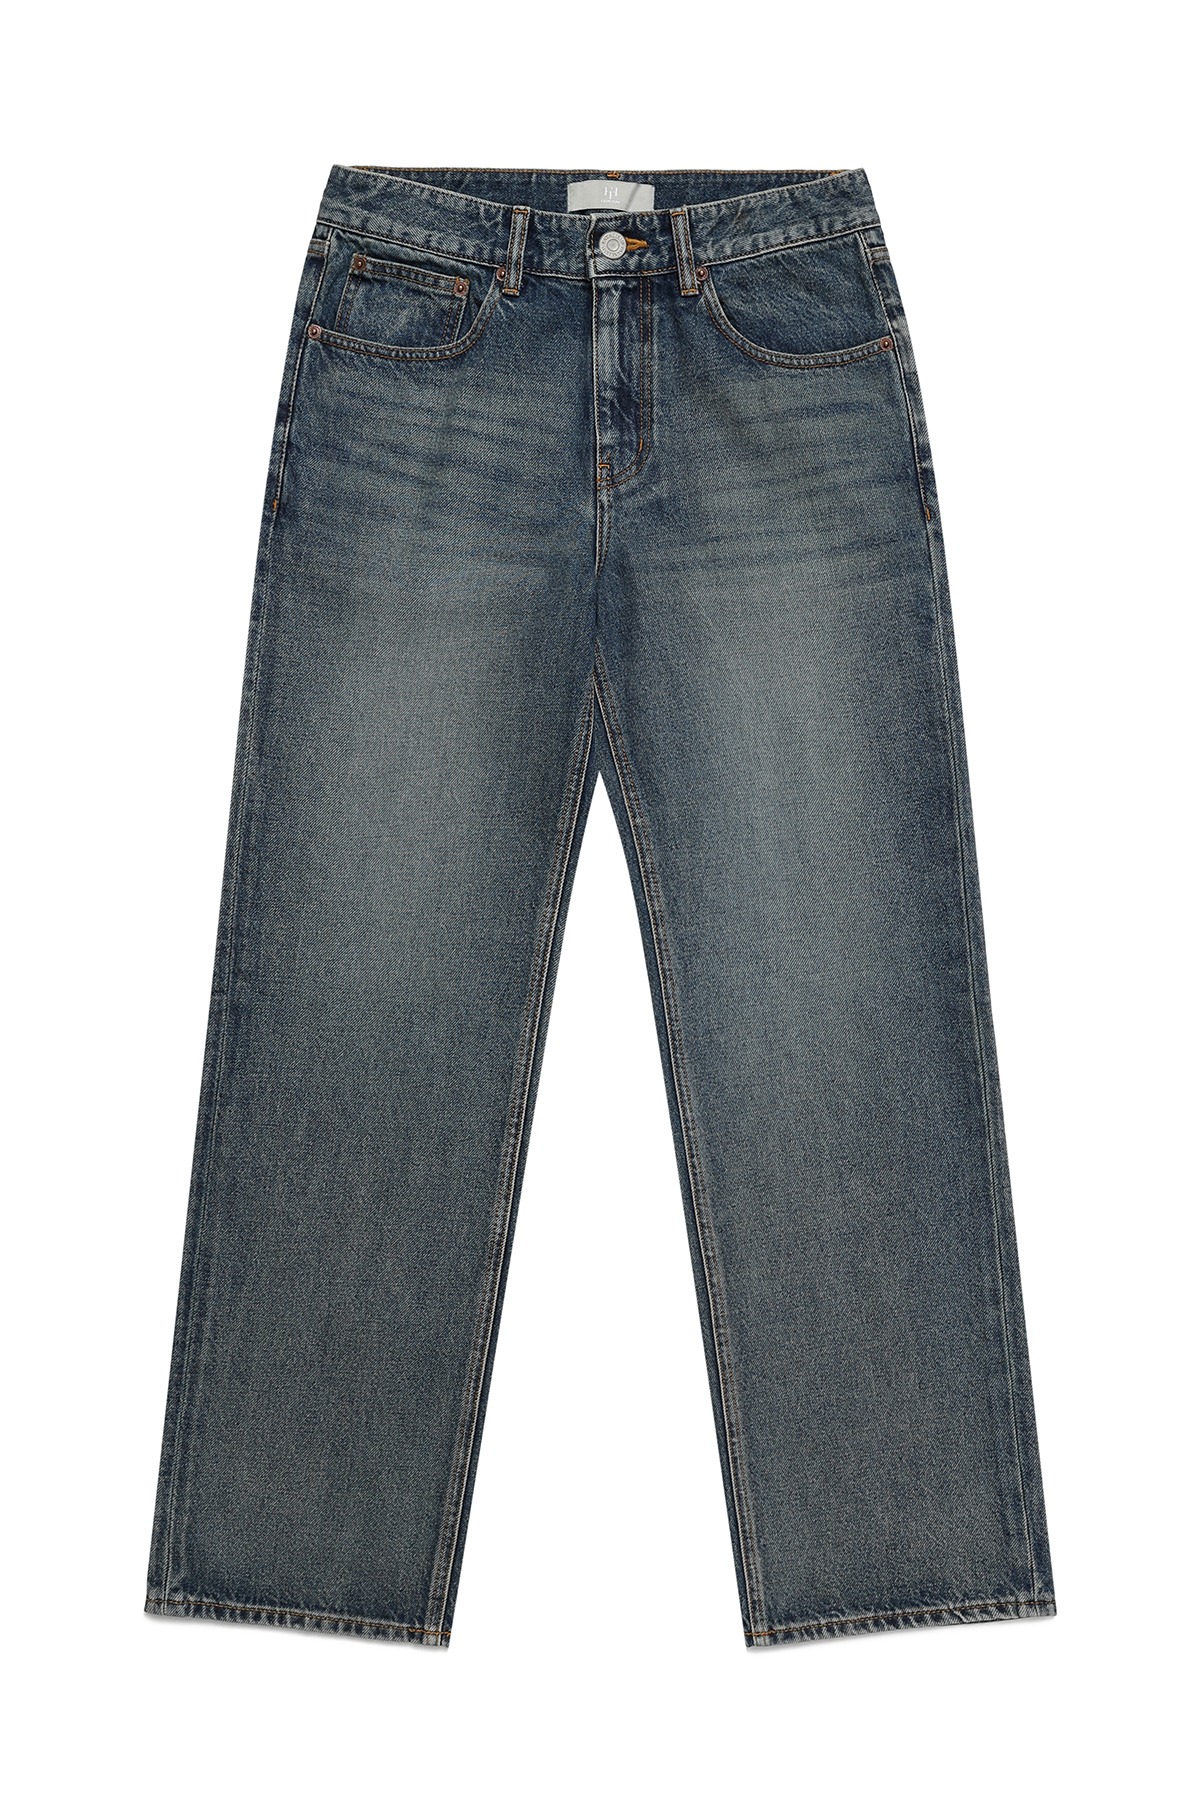 #0310 Vintage washed semi wide jeans